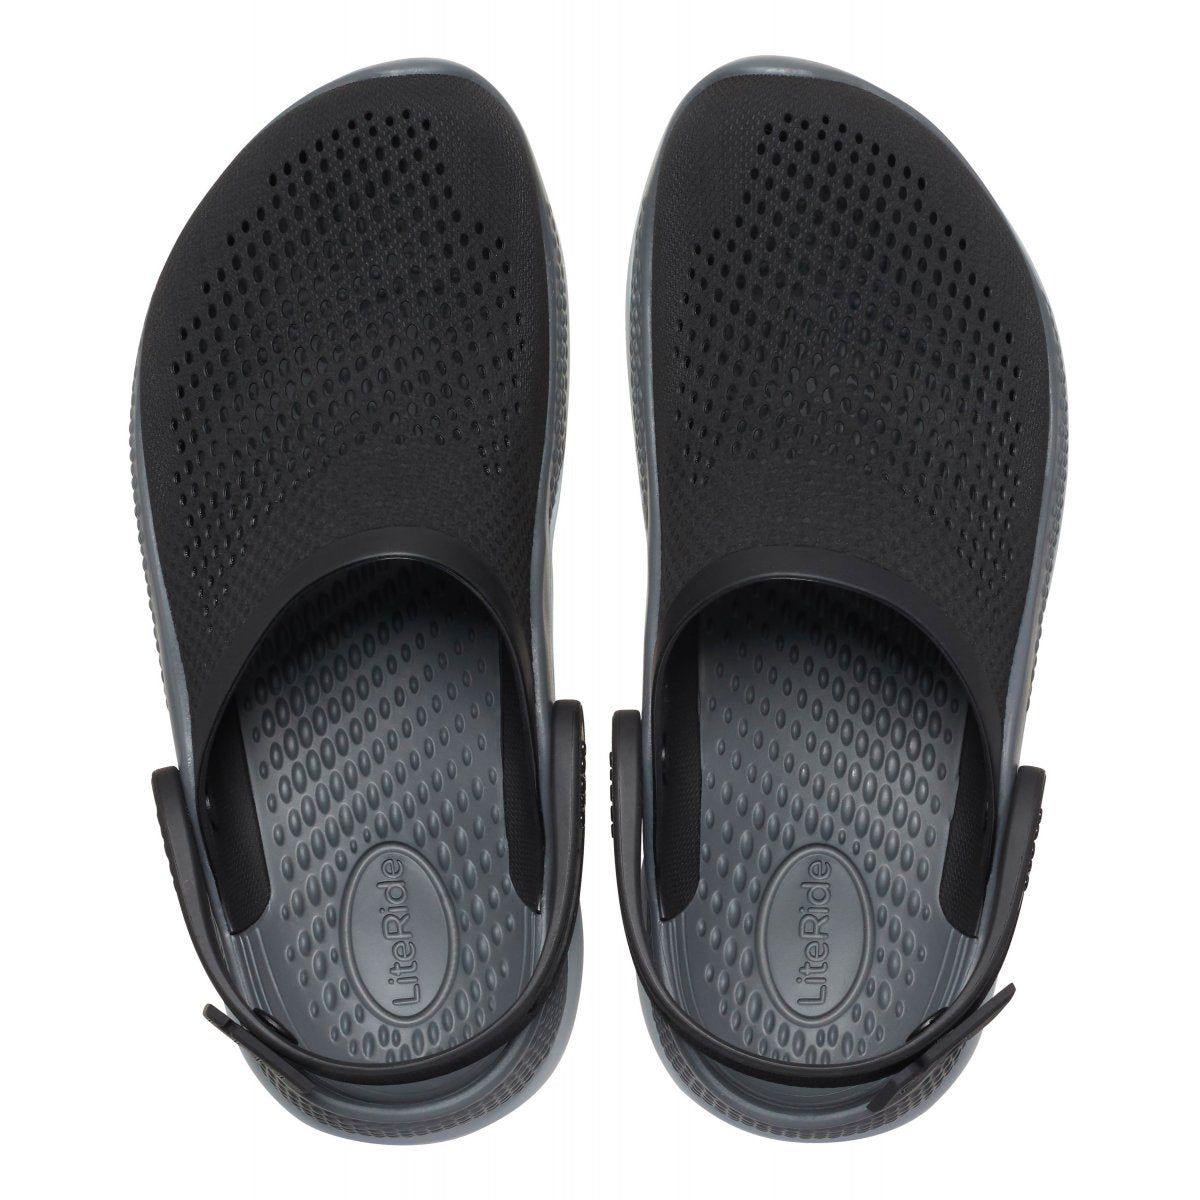 Crocs sabot slipper for men and women LiteRide 360° Clog 206708 0DD black-grey 